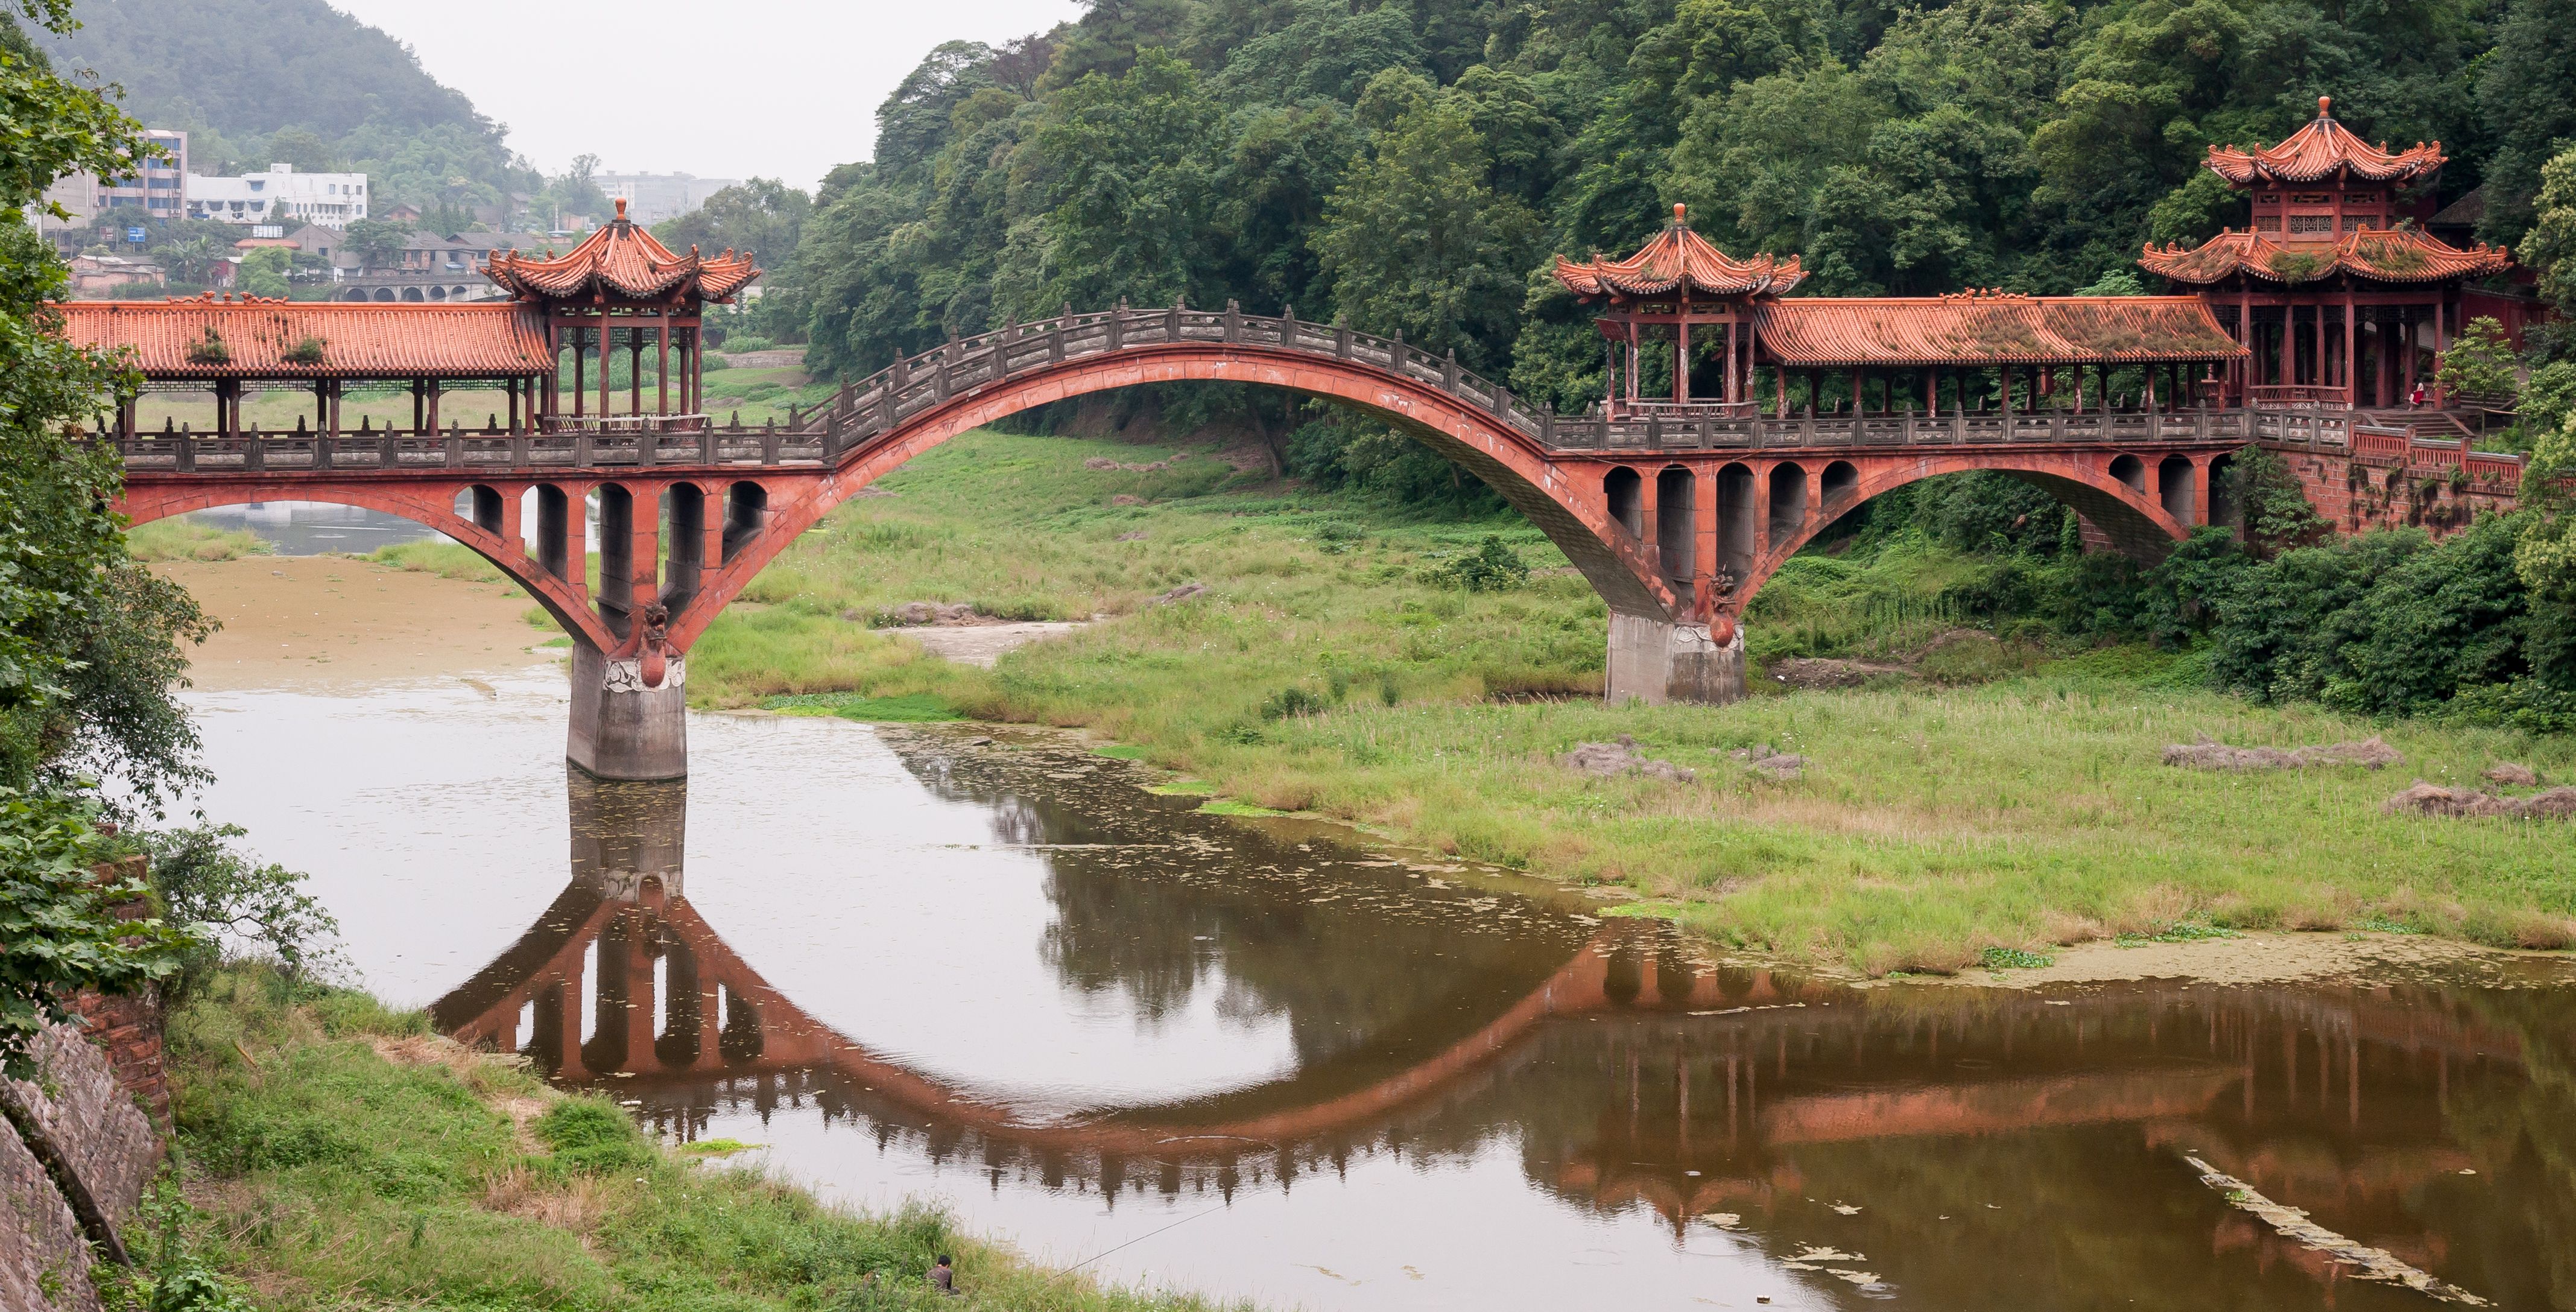 General 4271x2175 river pedestrian China Leshan bridge greenery mountains architecture bricks Chinese dragon